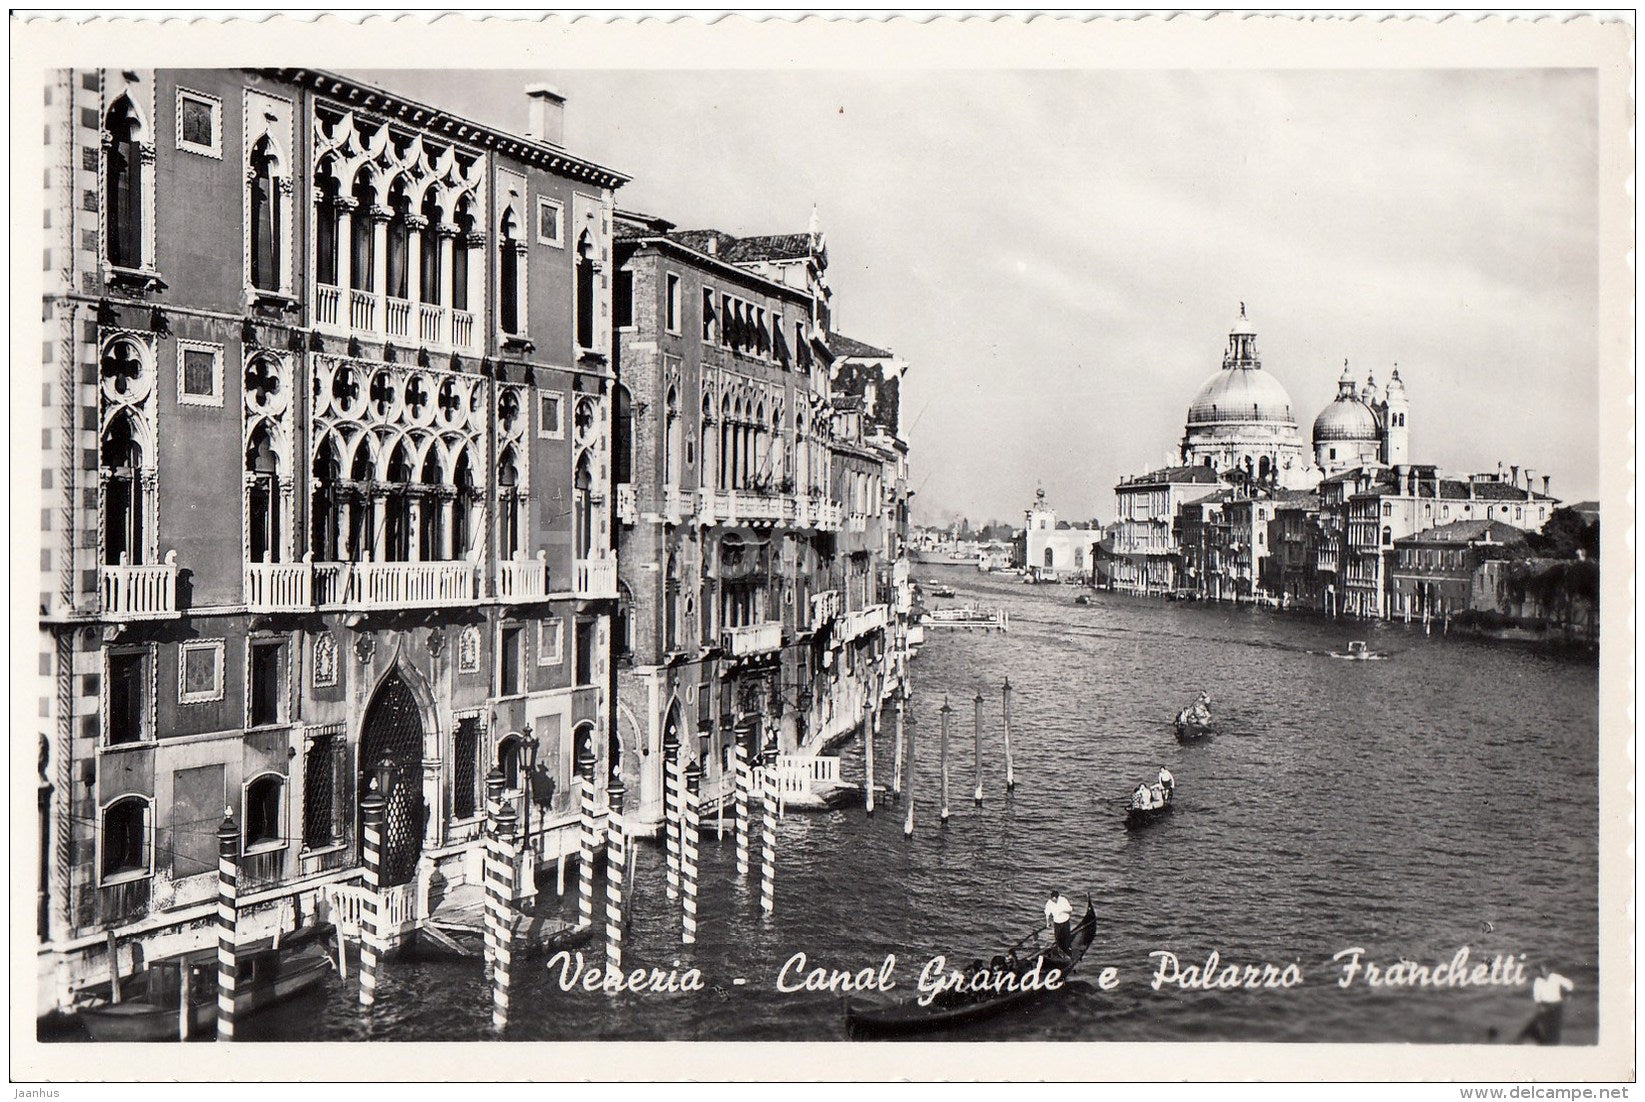 The Great Channel and Palace Franchetti - Venice - Venezia - 144 - Italy - Italia - unused - JH Postcards